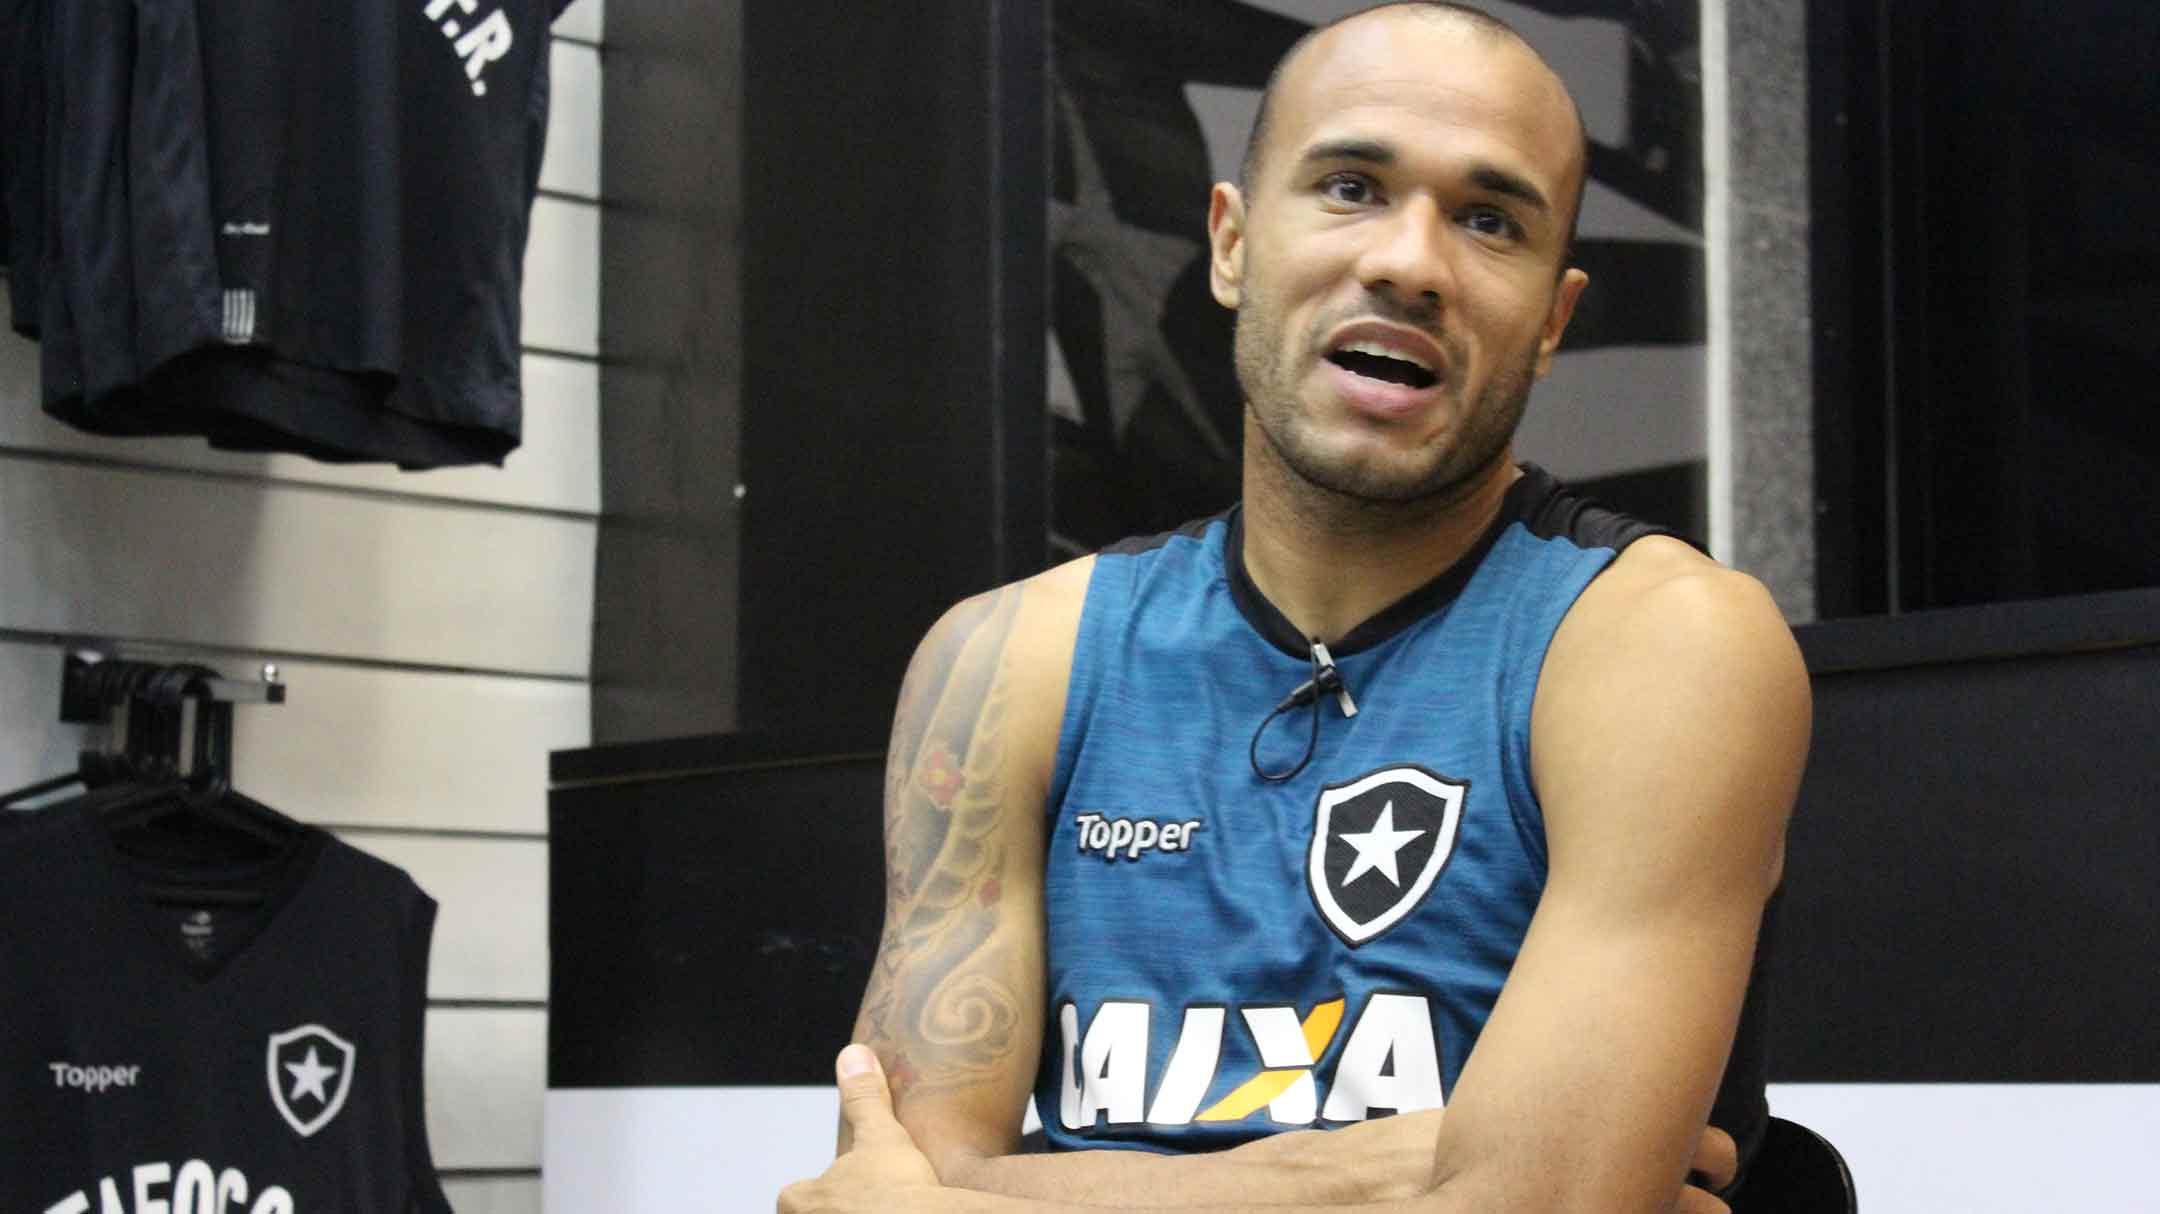 Entrevista Exclusiva com Roger - Botafogo